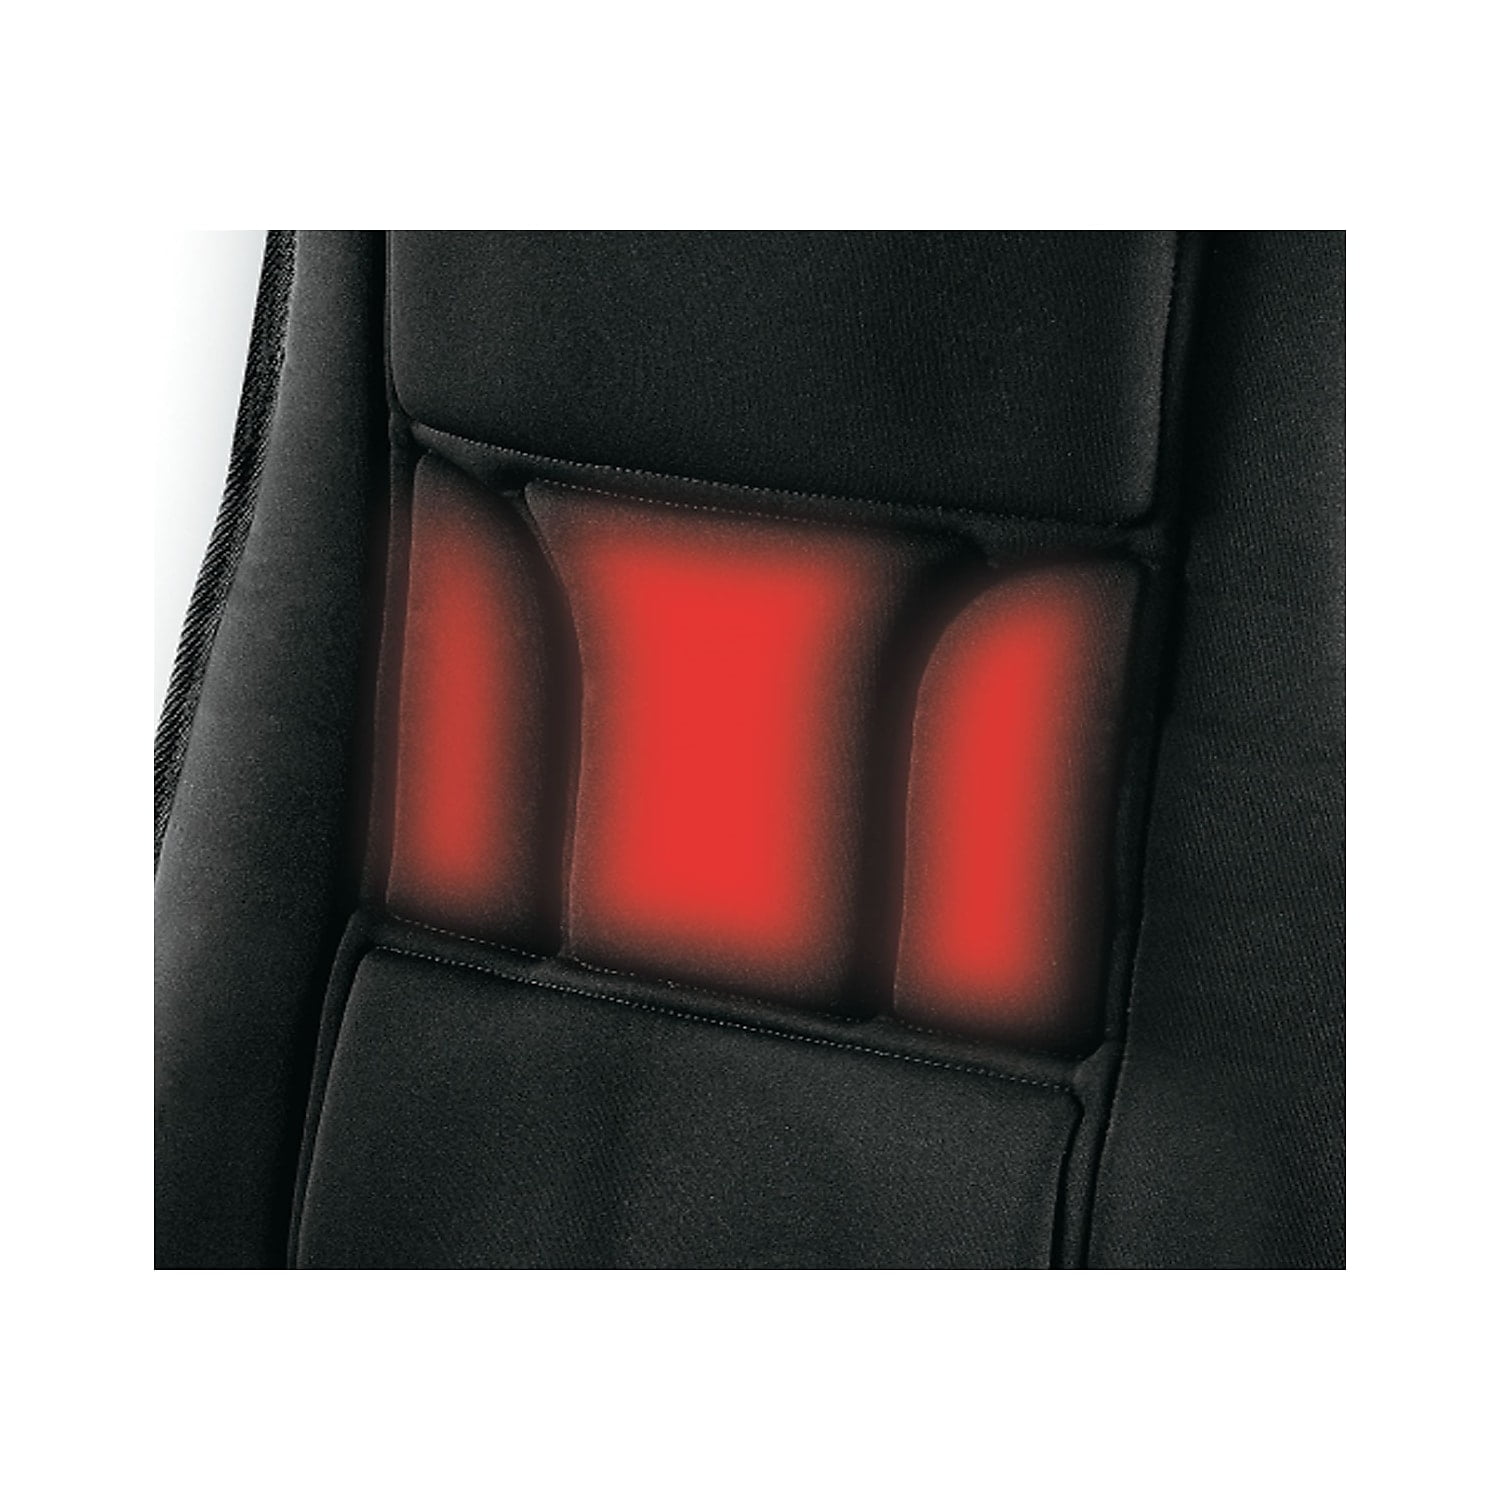 Conair Body Benefits Heated Massaging Seat Cushion